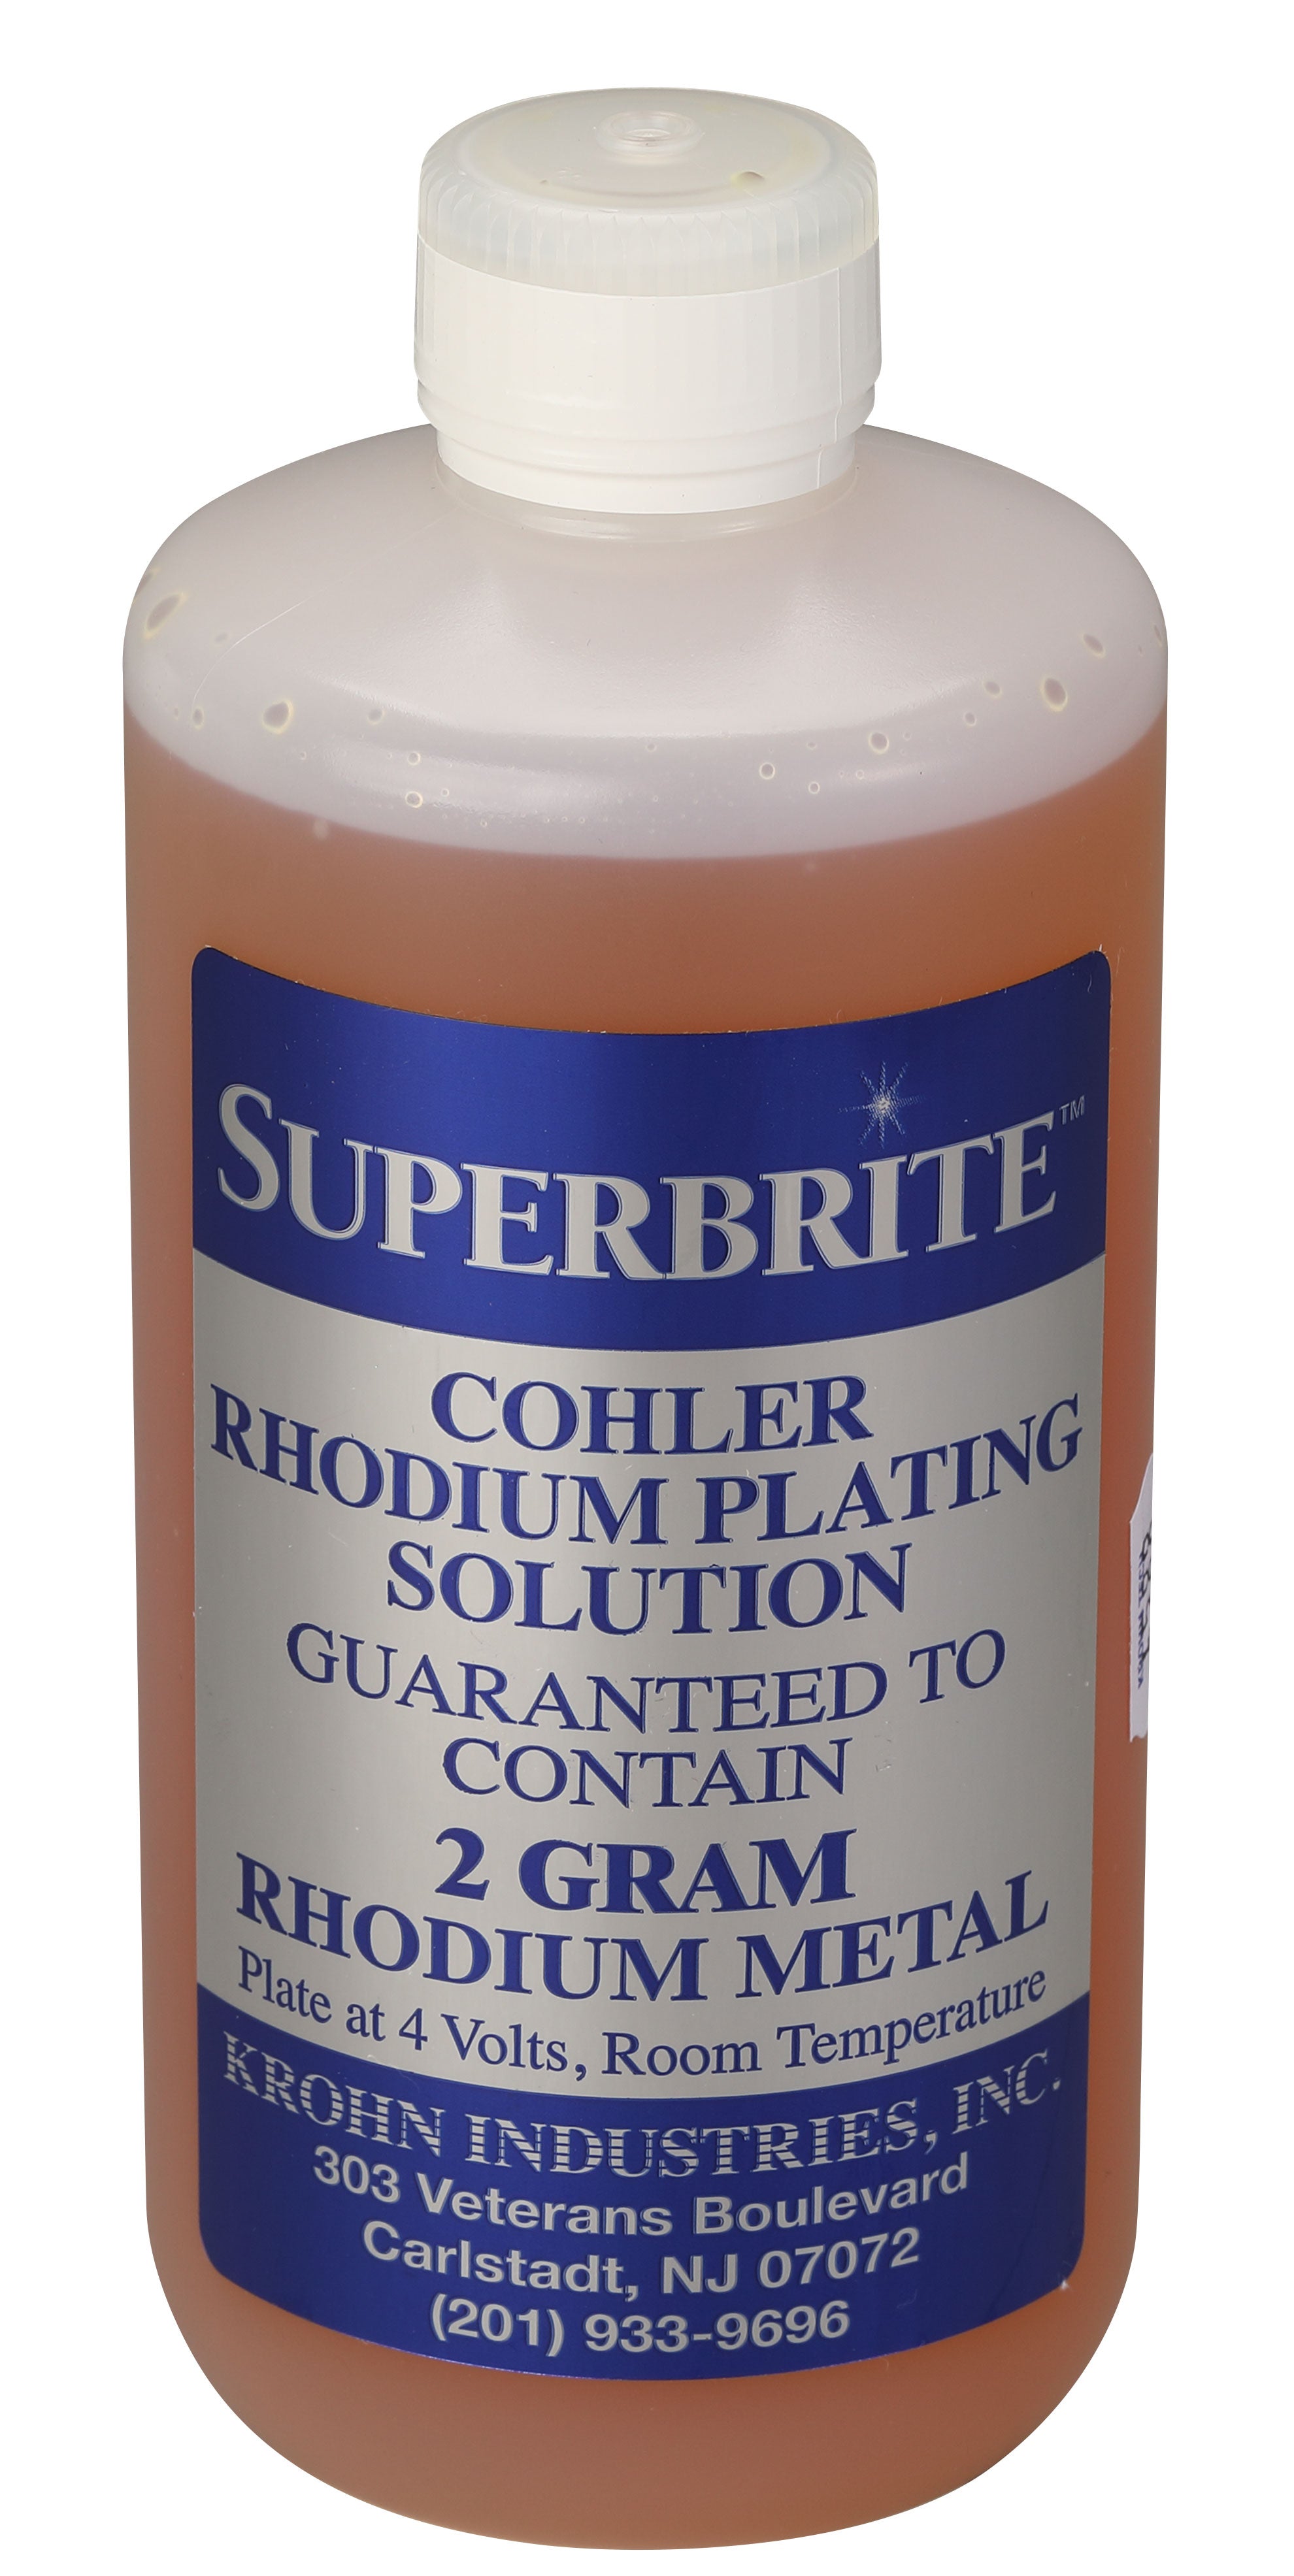 Rhodium Plating Solution